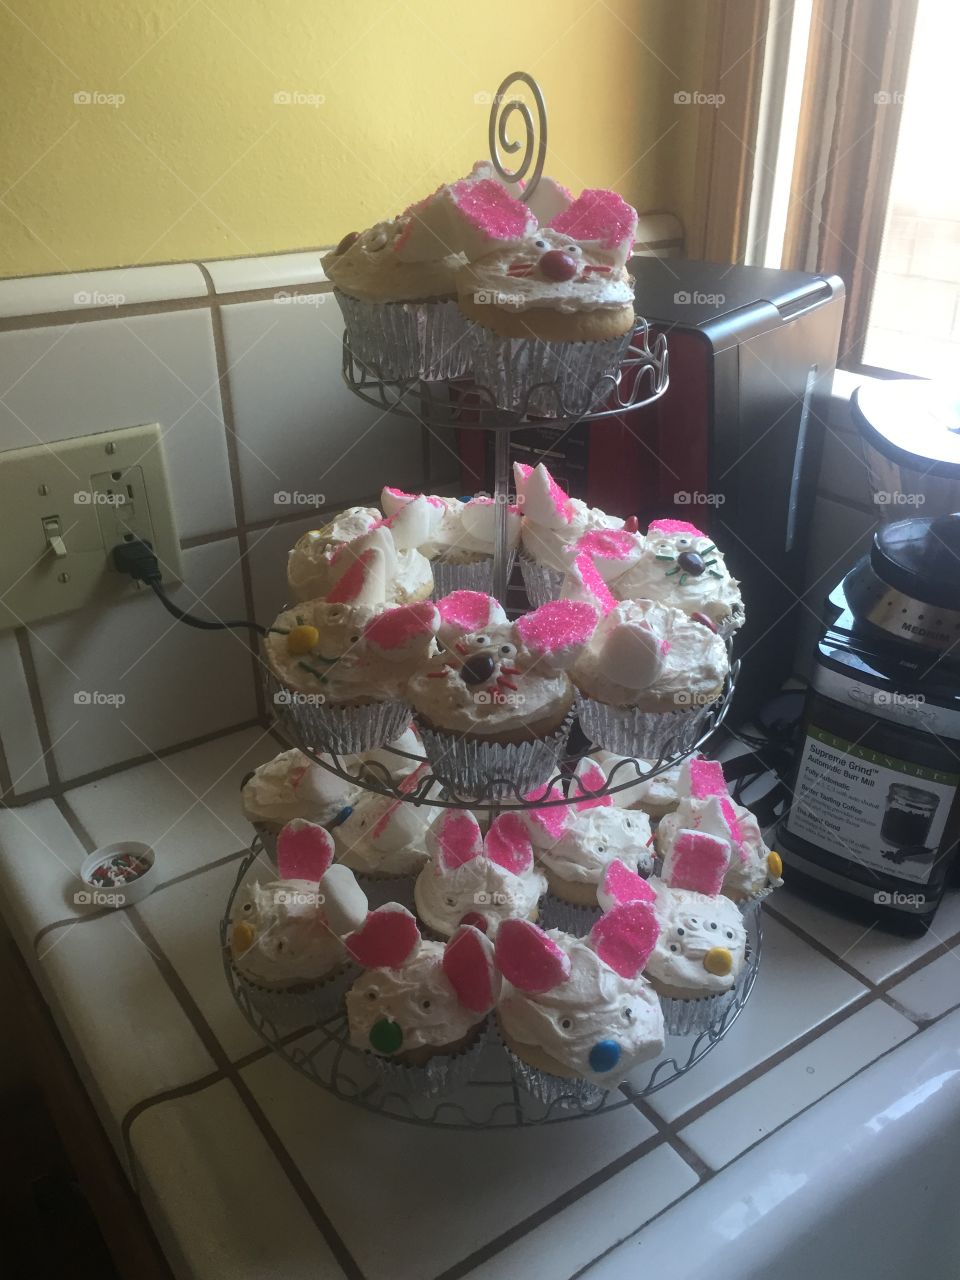 Bunny cupcakes
